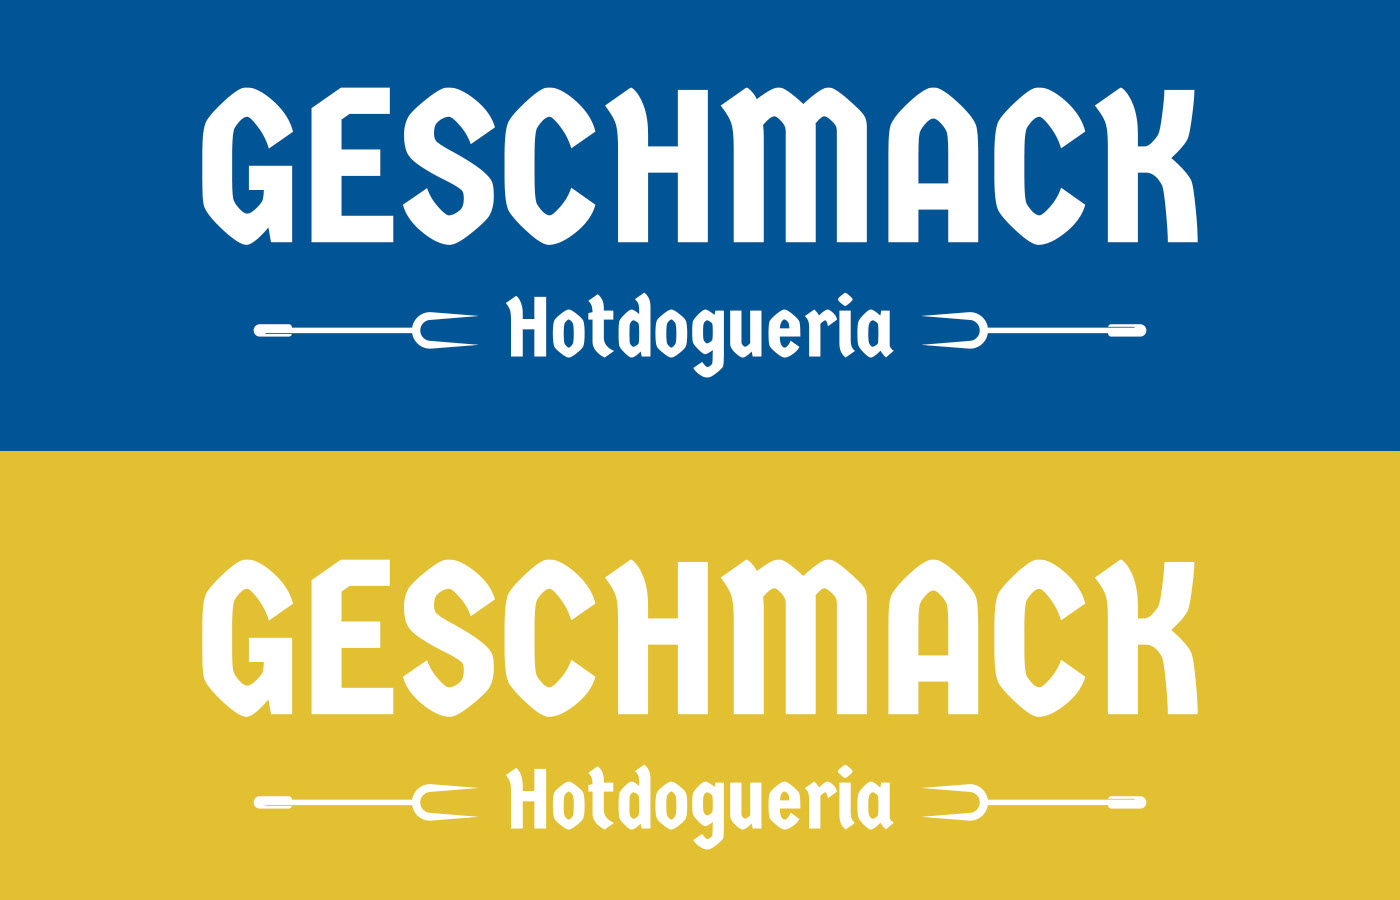 Logotipo design Fast food hamburgueria brand identity Graphic Designer visual identity Brand Design Logotype